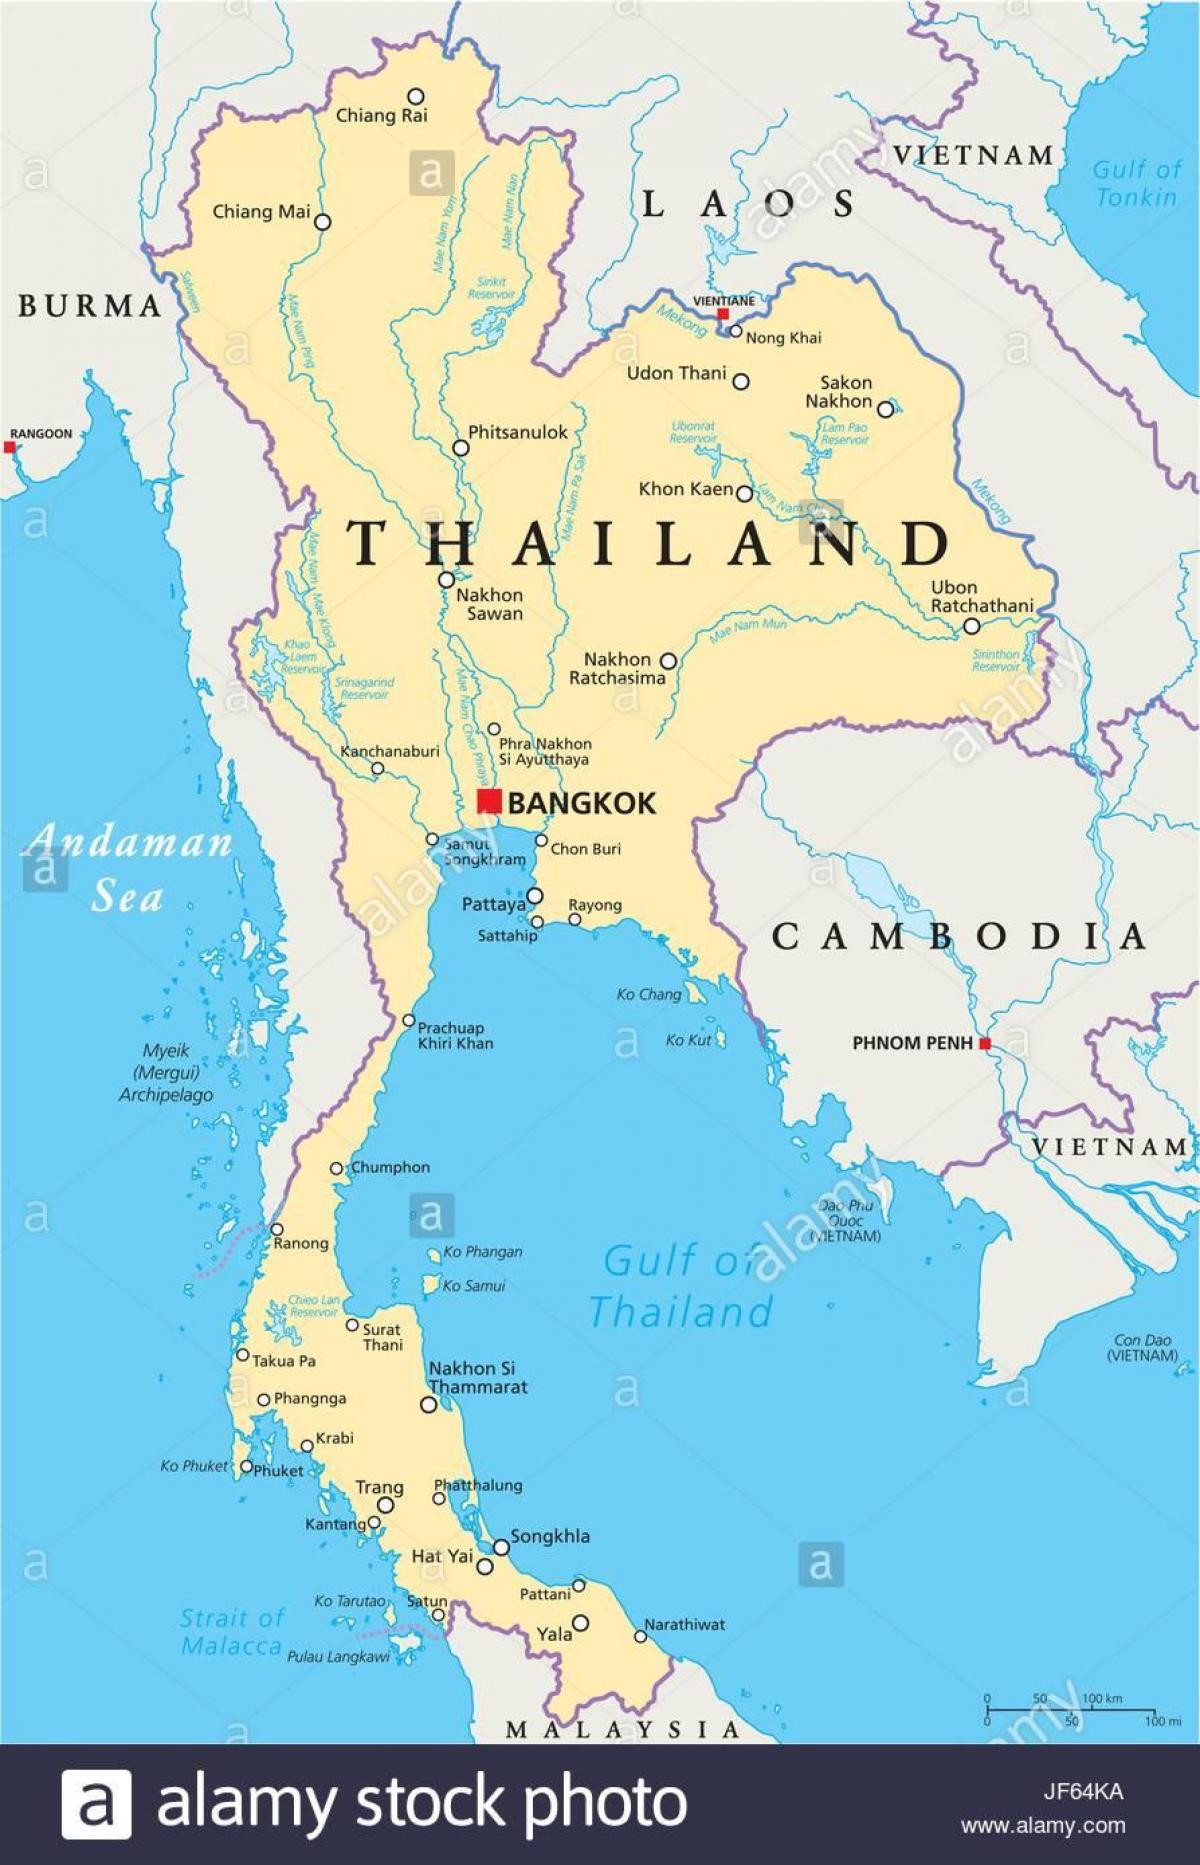 bangkok thailanda harta lumii